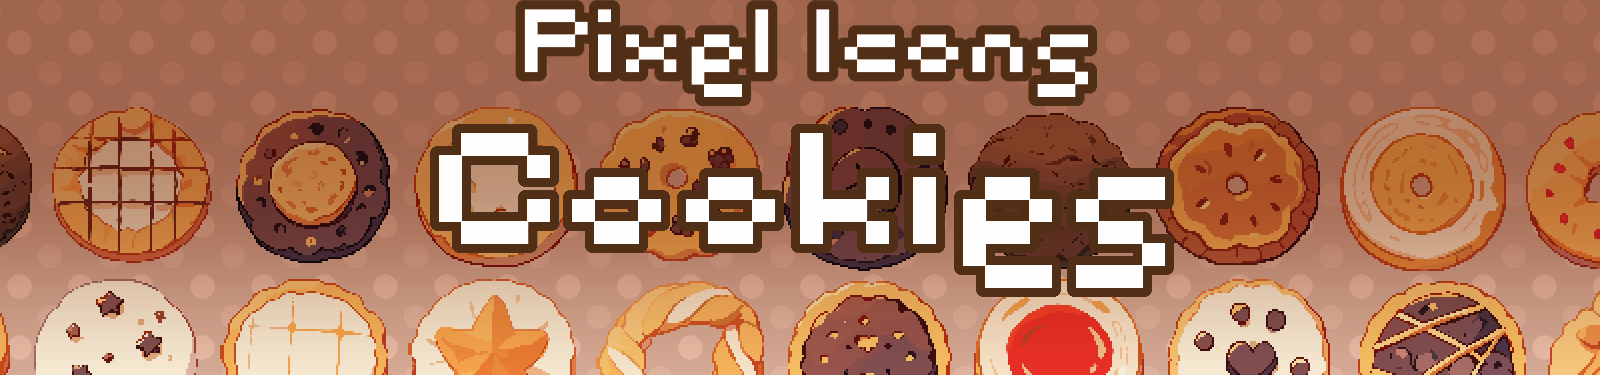 Pixel Icons: Cookies